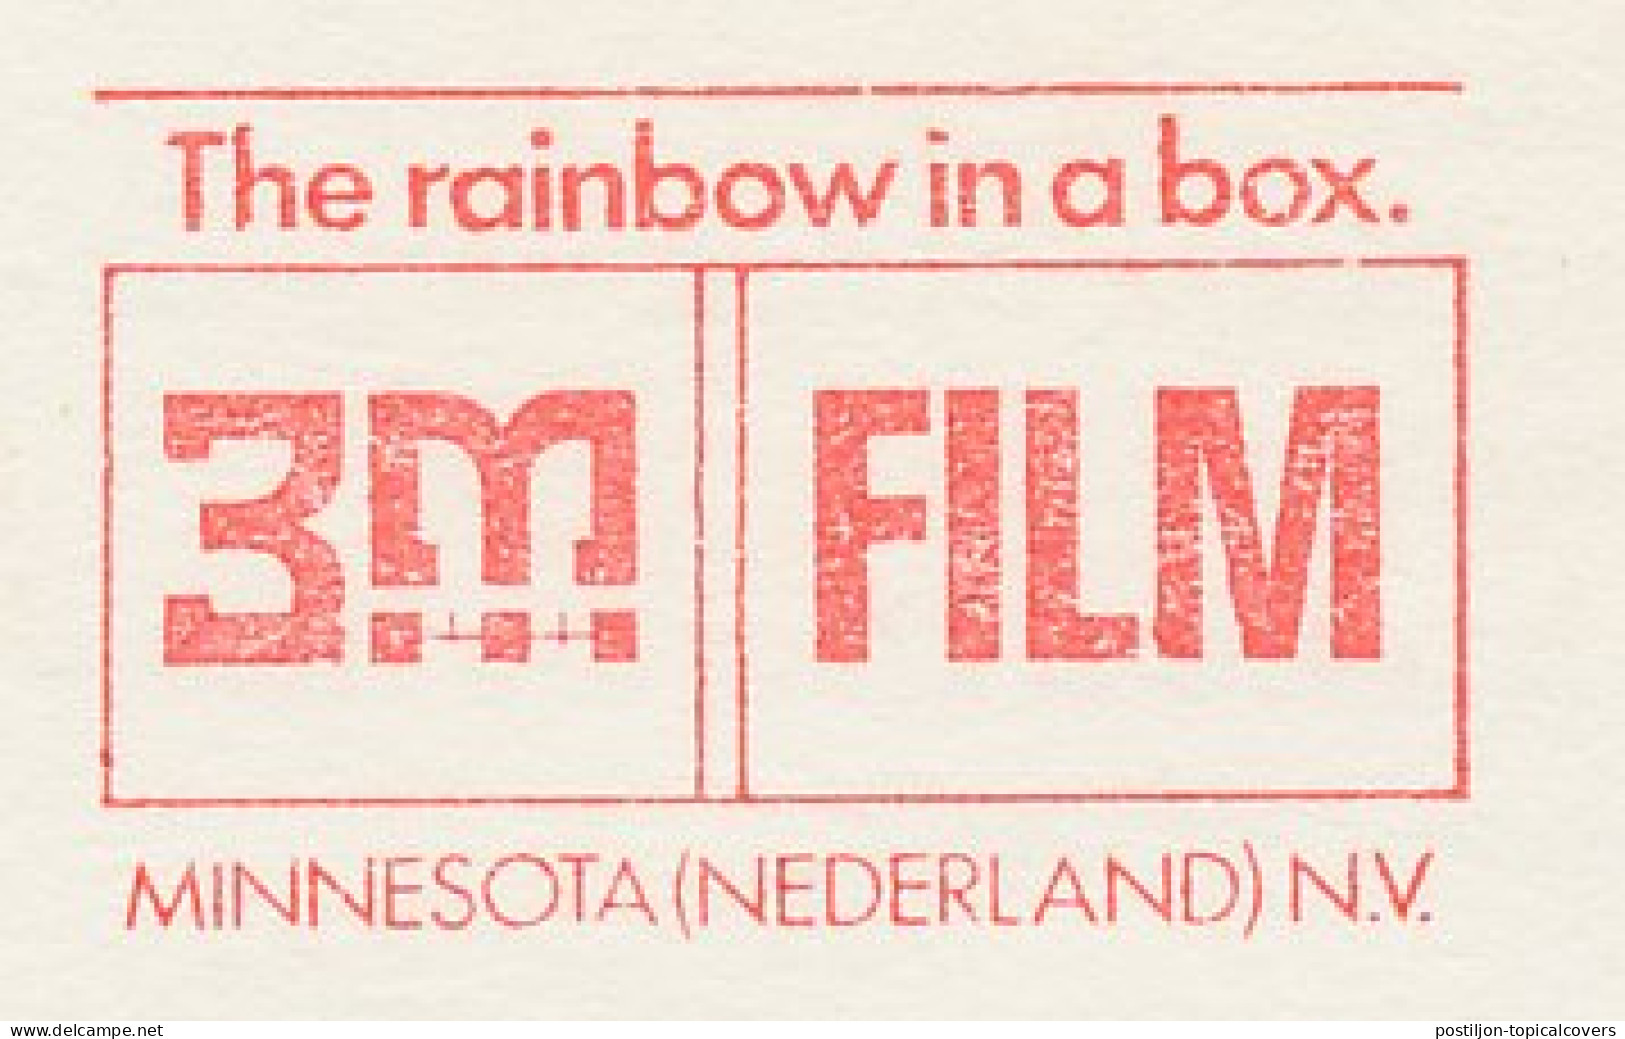 Meter Card Netherlands 1972 3M Film - The Rainbow In A Box - Leiden - Cinema